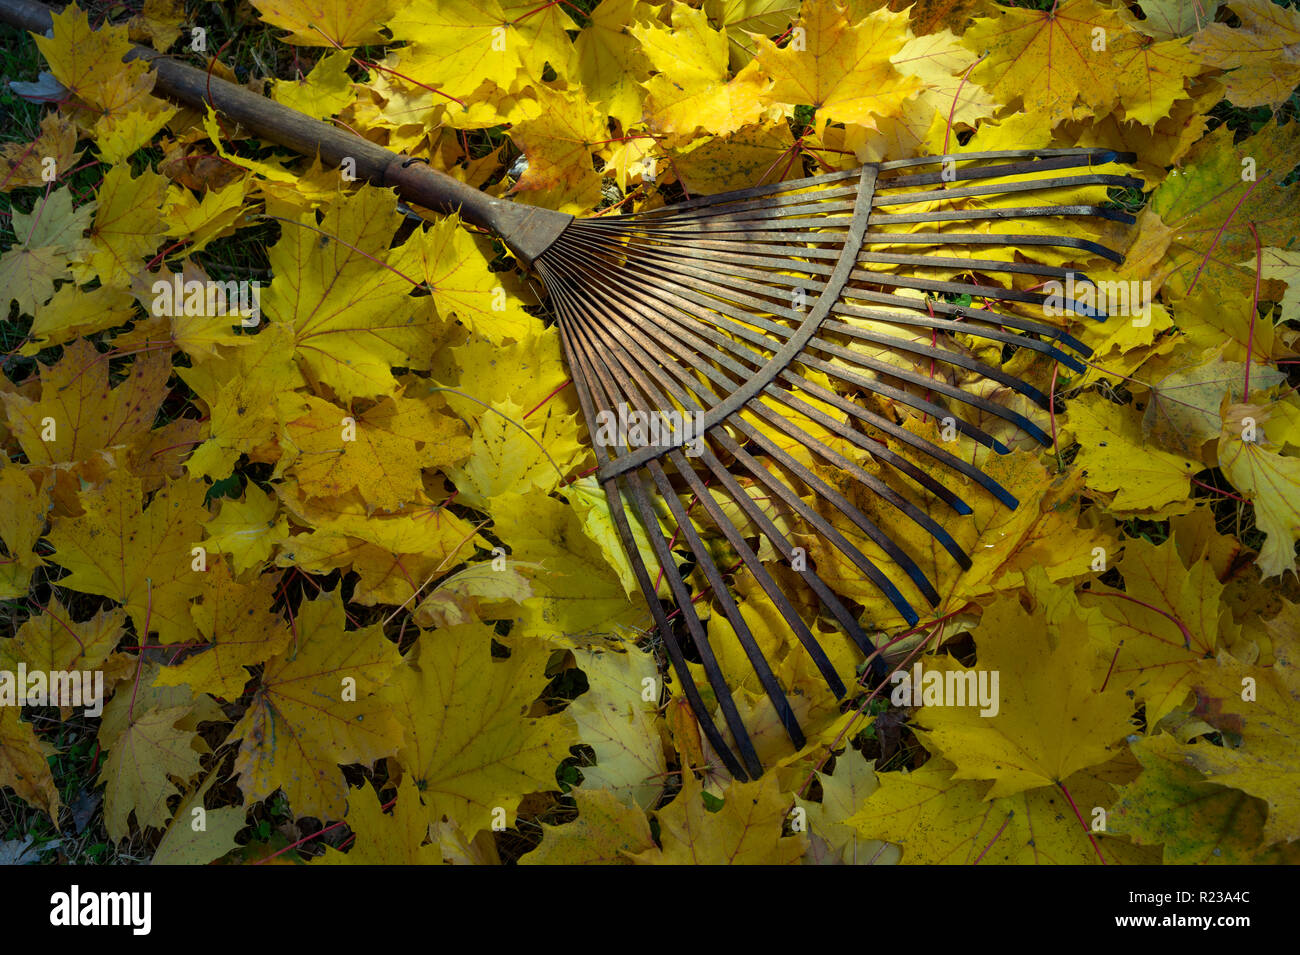 Alte Metall Blatt Rechen mit gelbem Ahorn Blätter Herbst Szene Stockfoto